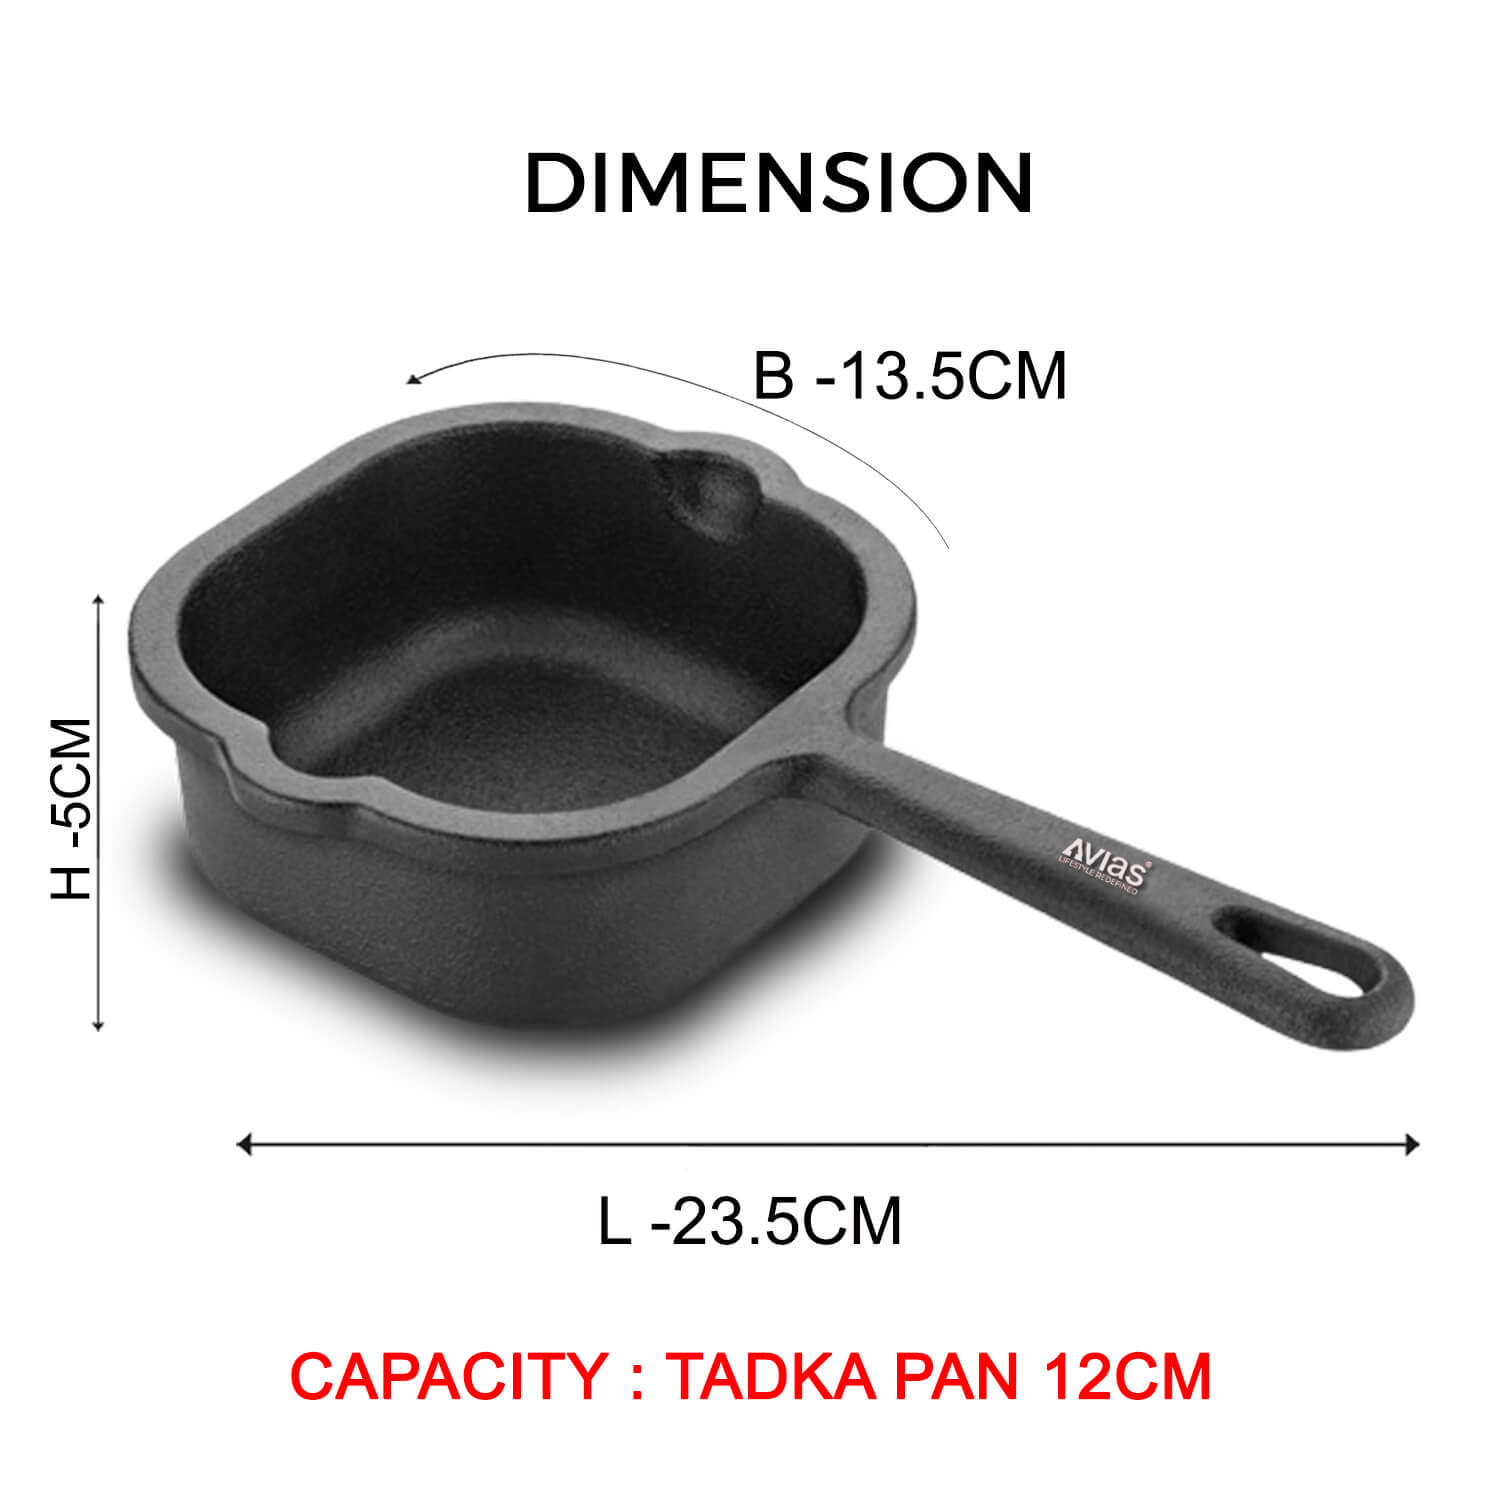 Cast Iron Tadka Pan/ Tempering Tadka Pan/ Spice Pan dimension Pre-Seasoned Cookware 